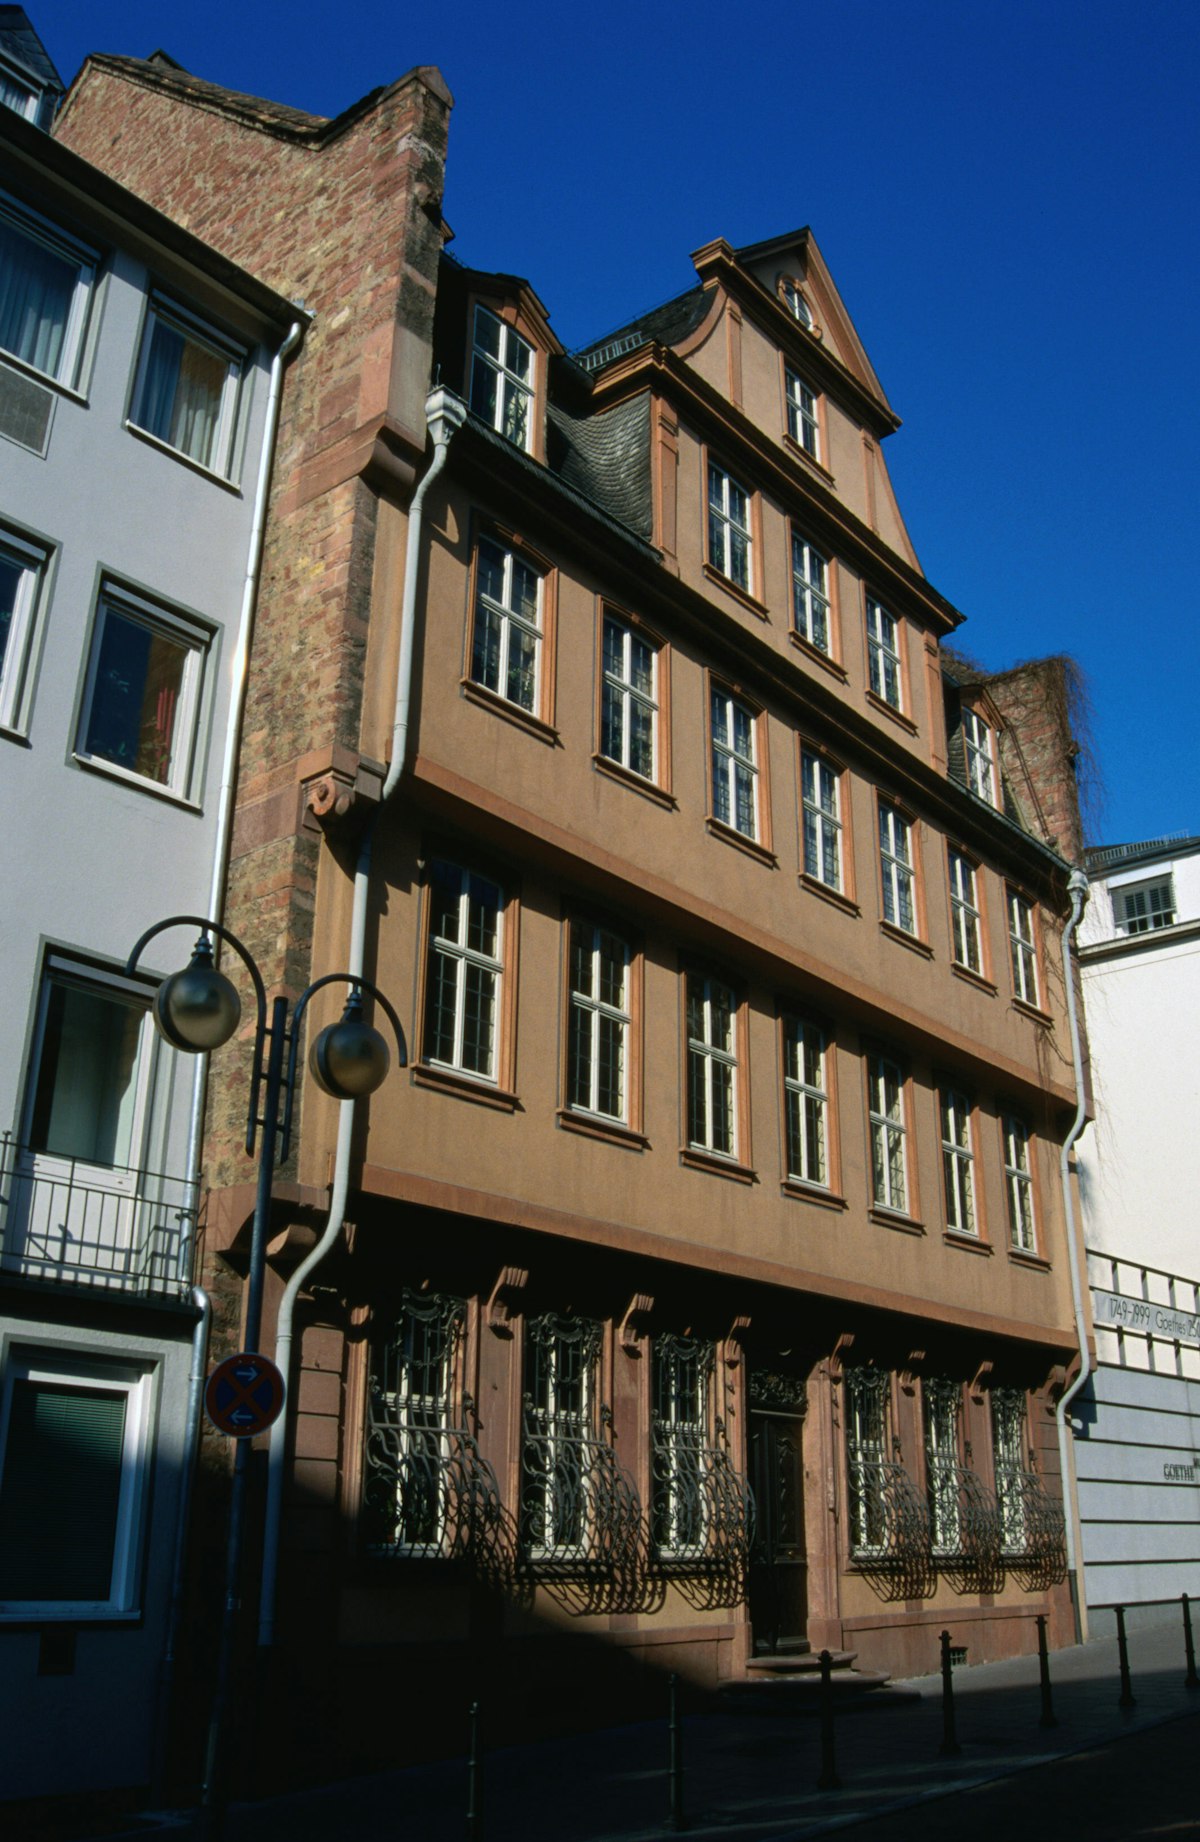 Goethe House, where Johann Wolfgang von Goethe was born in 1749 - Frankfurt, Hesse